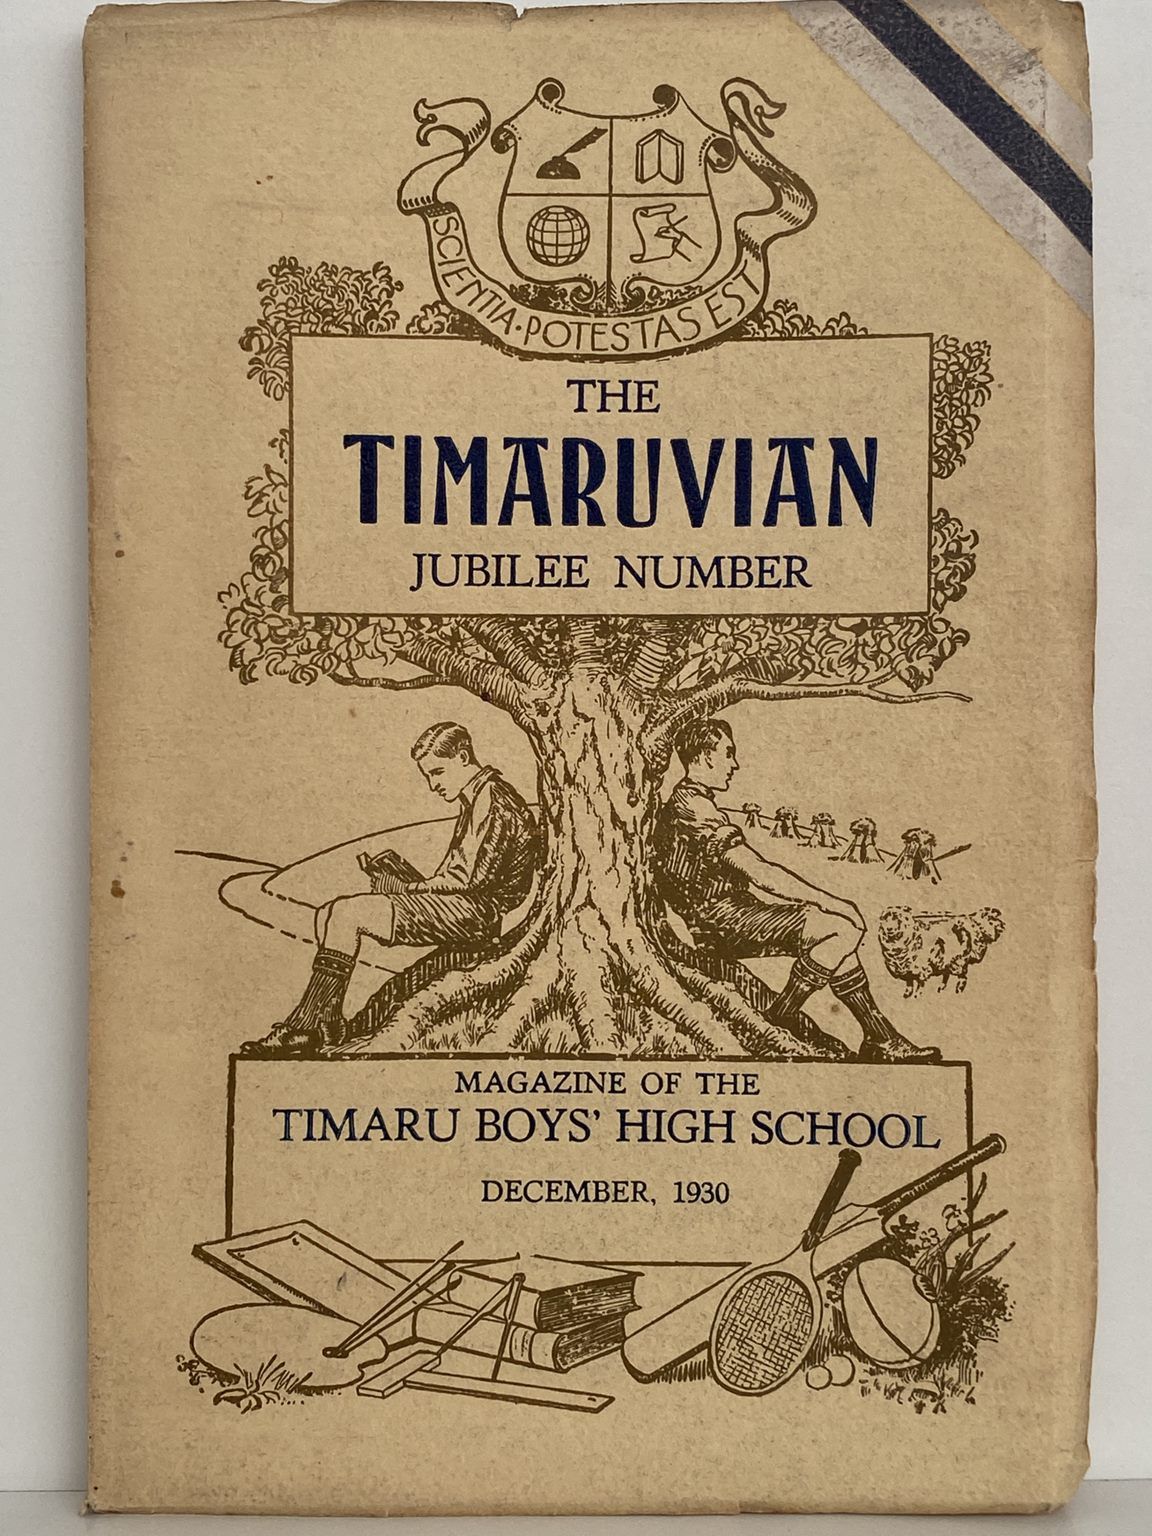 THE TIMARUVIAN: Magazine of the Timaru Boys' High School - December 1930